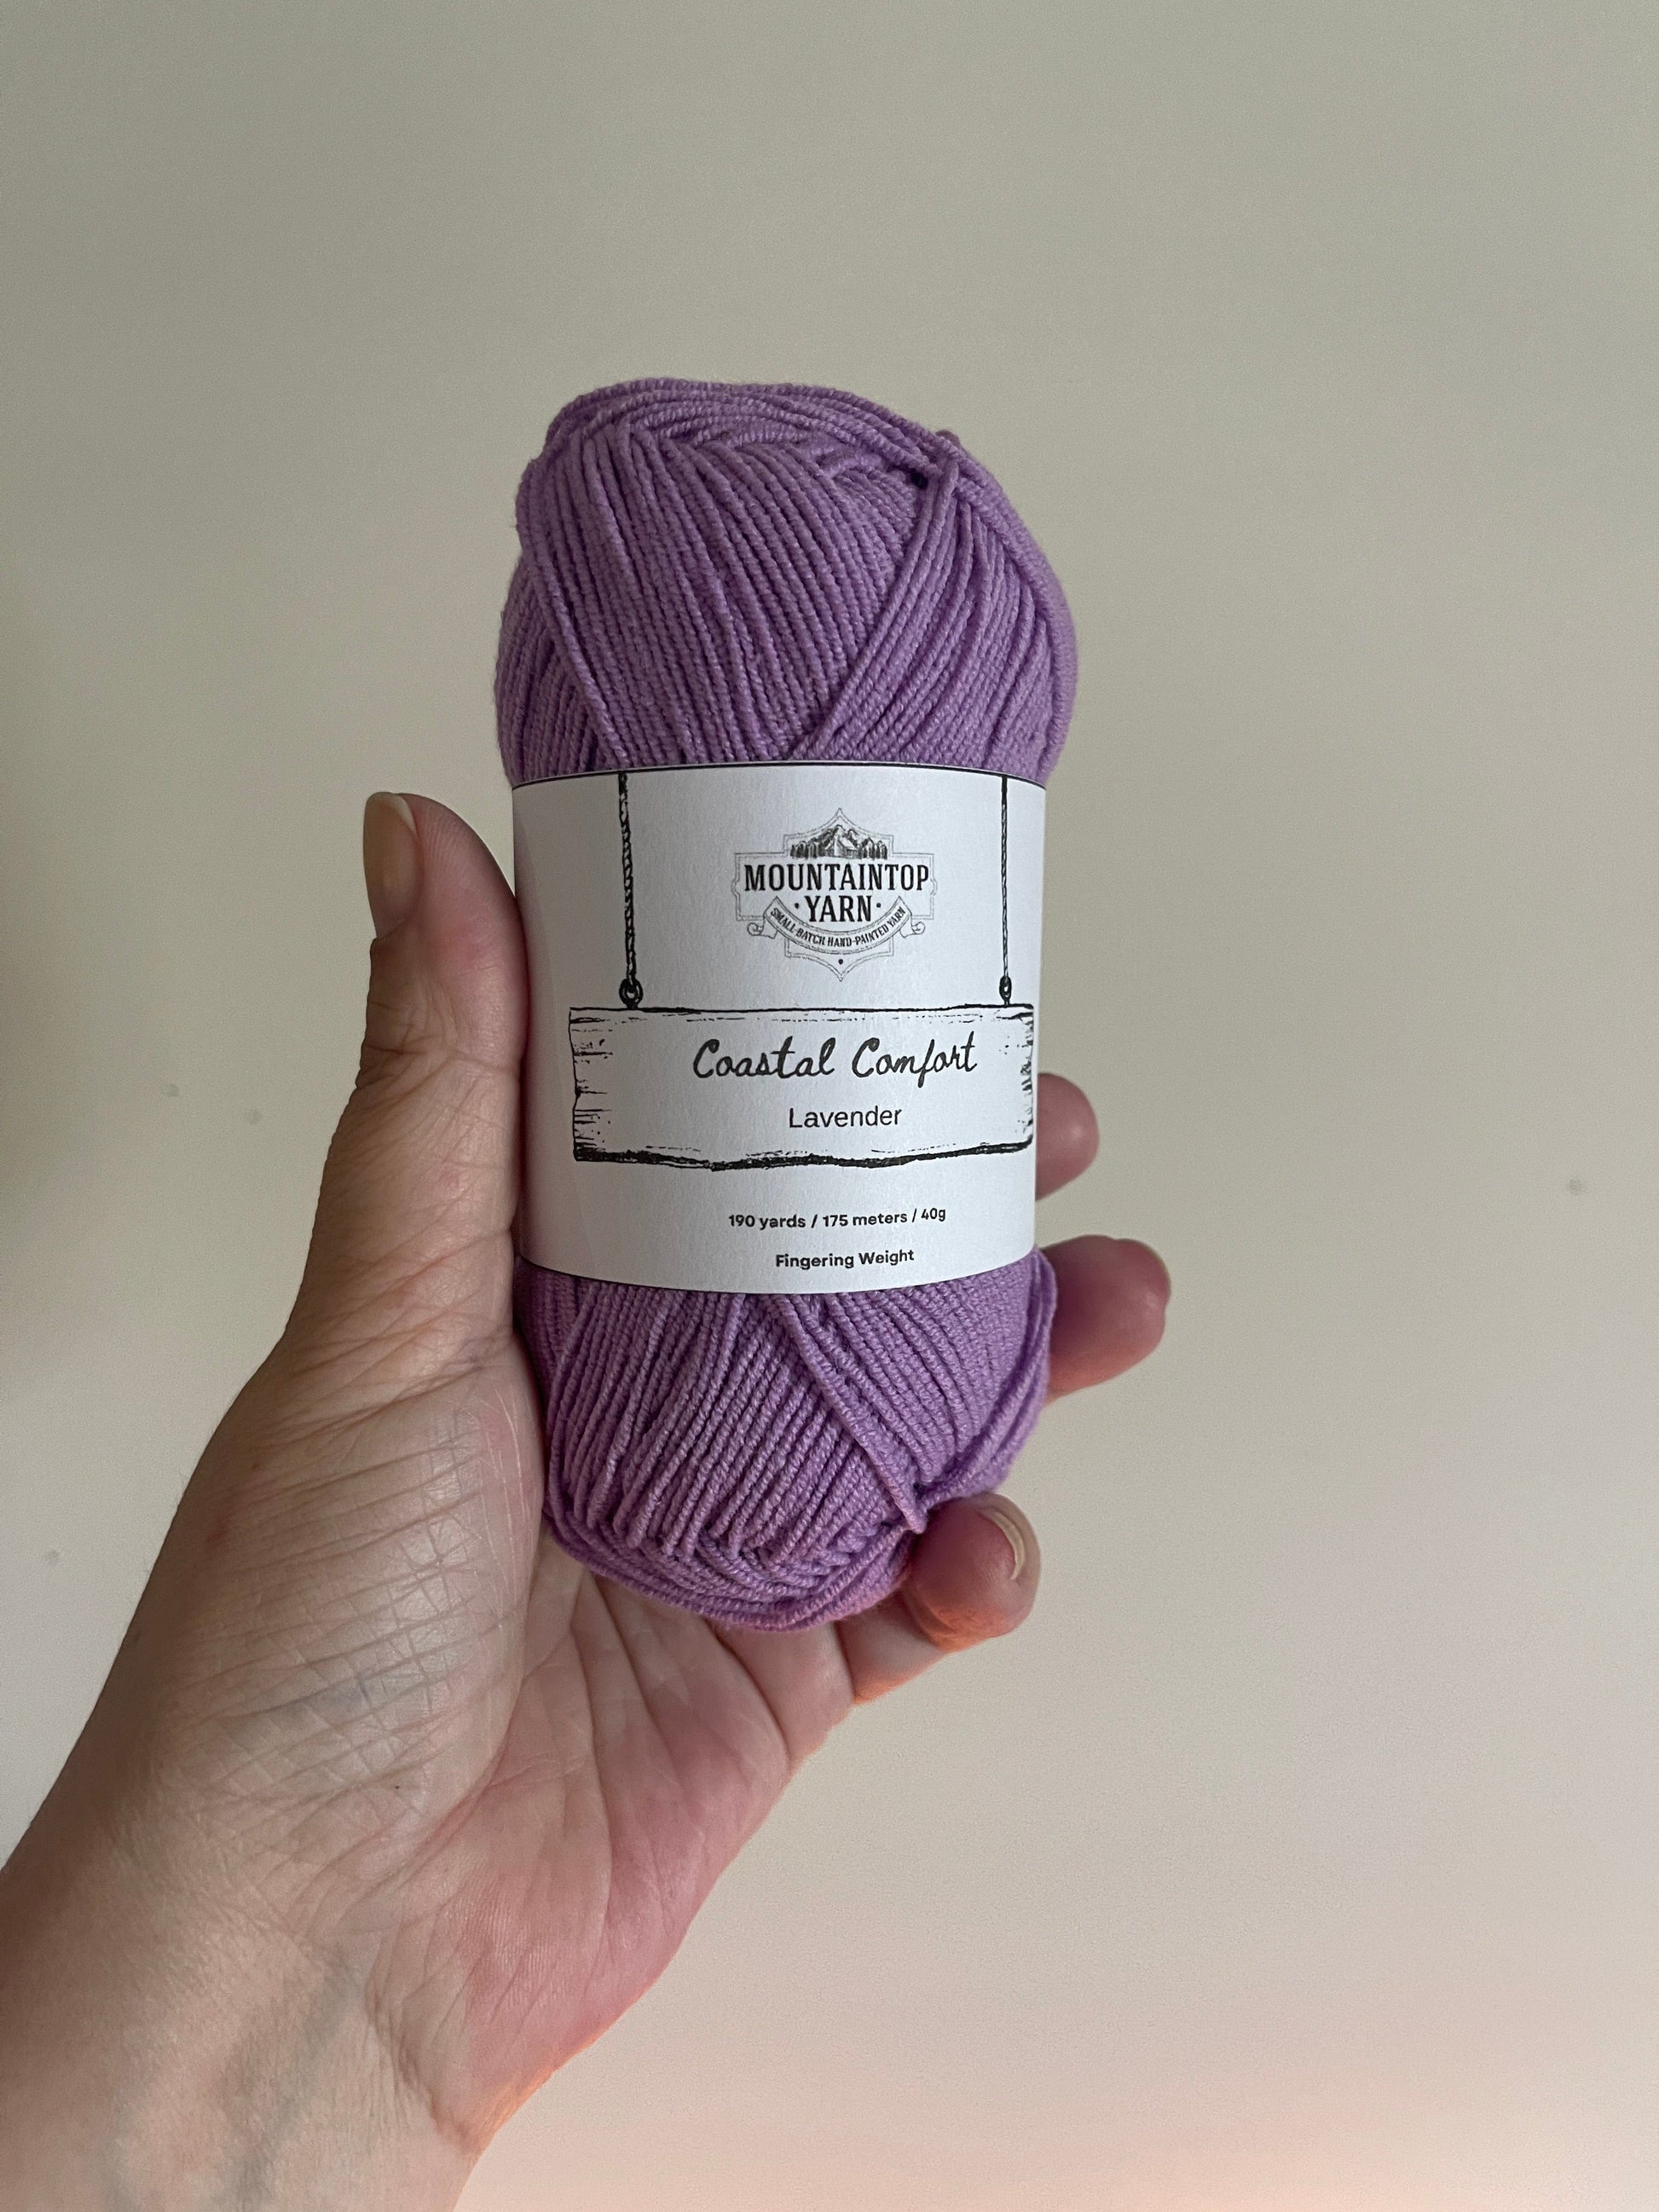 Mountaintop Yarn Lavender Coastal Comfort - Cotton and Acrylic Blend Yarn Yarn